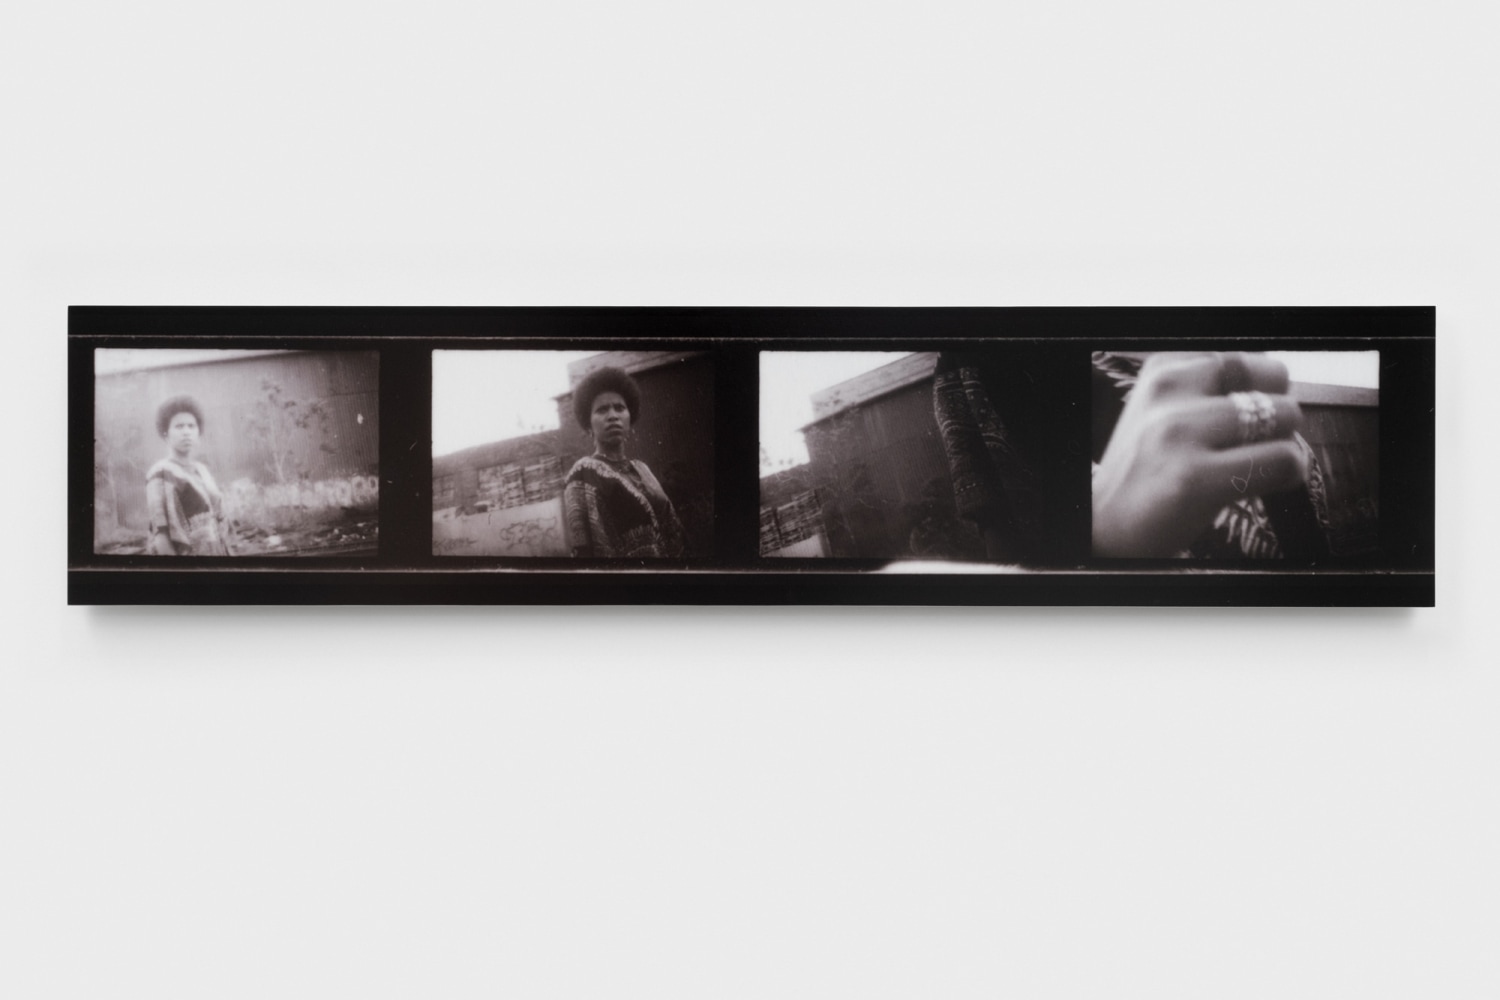 Coco Fusco
Sightings 3, 2004
Digital photographs mounted on aluminum
9 &amp;times; 40&amp;nbsp;&amp;frac34; &amp;times;&amp;nbsp;⅝ in.
(22.9 &amp;times; 103.5 &amp;times; 1.6 cm)